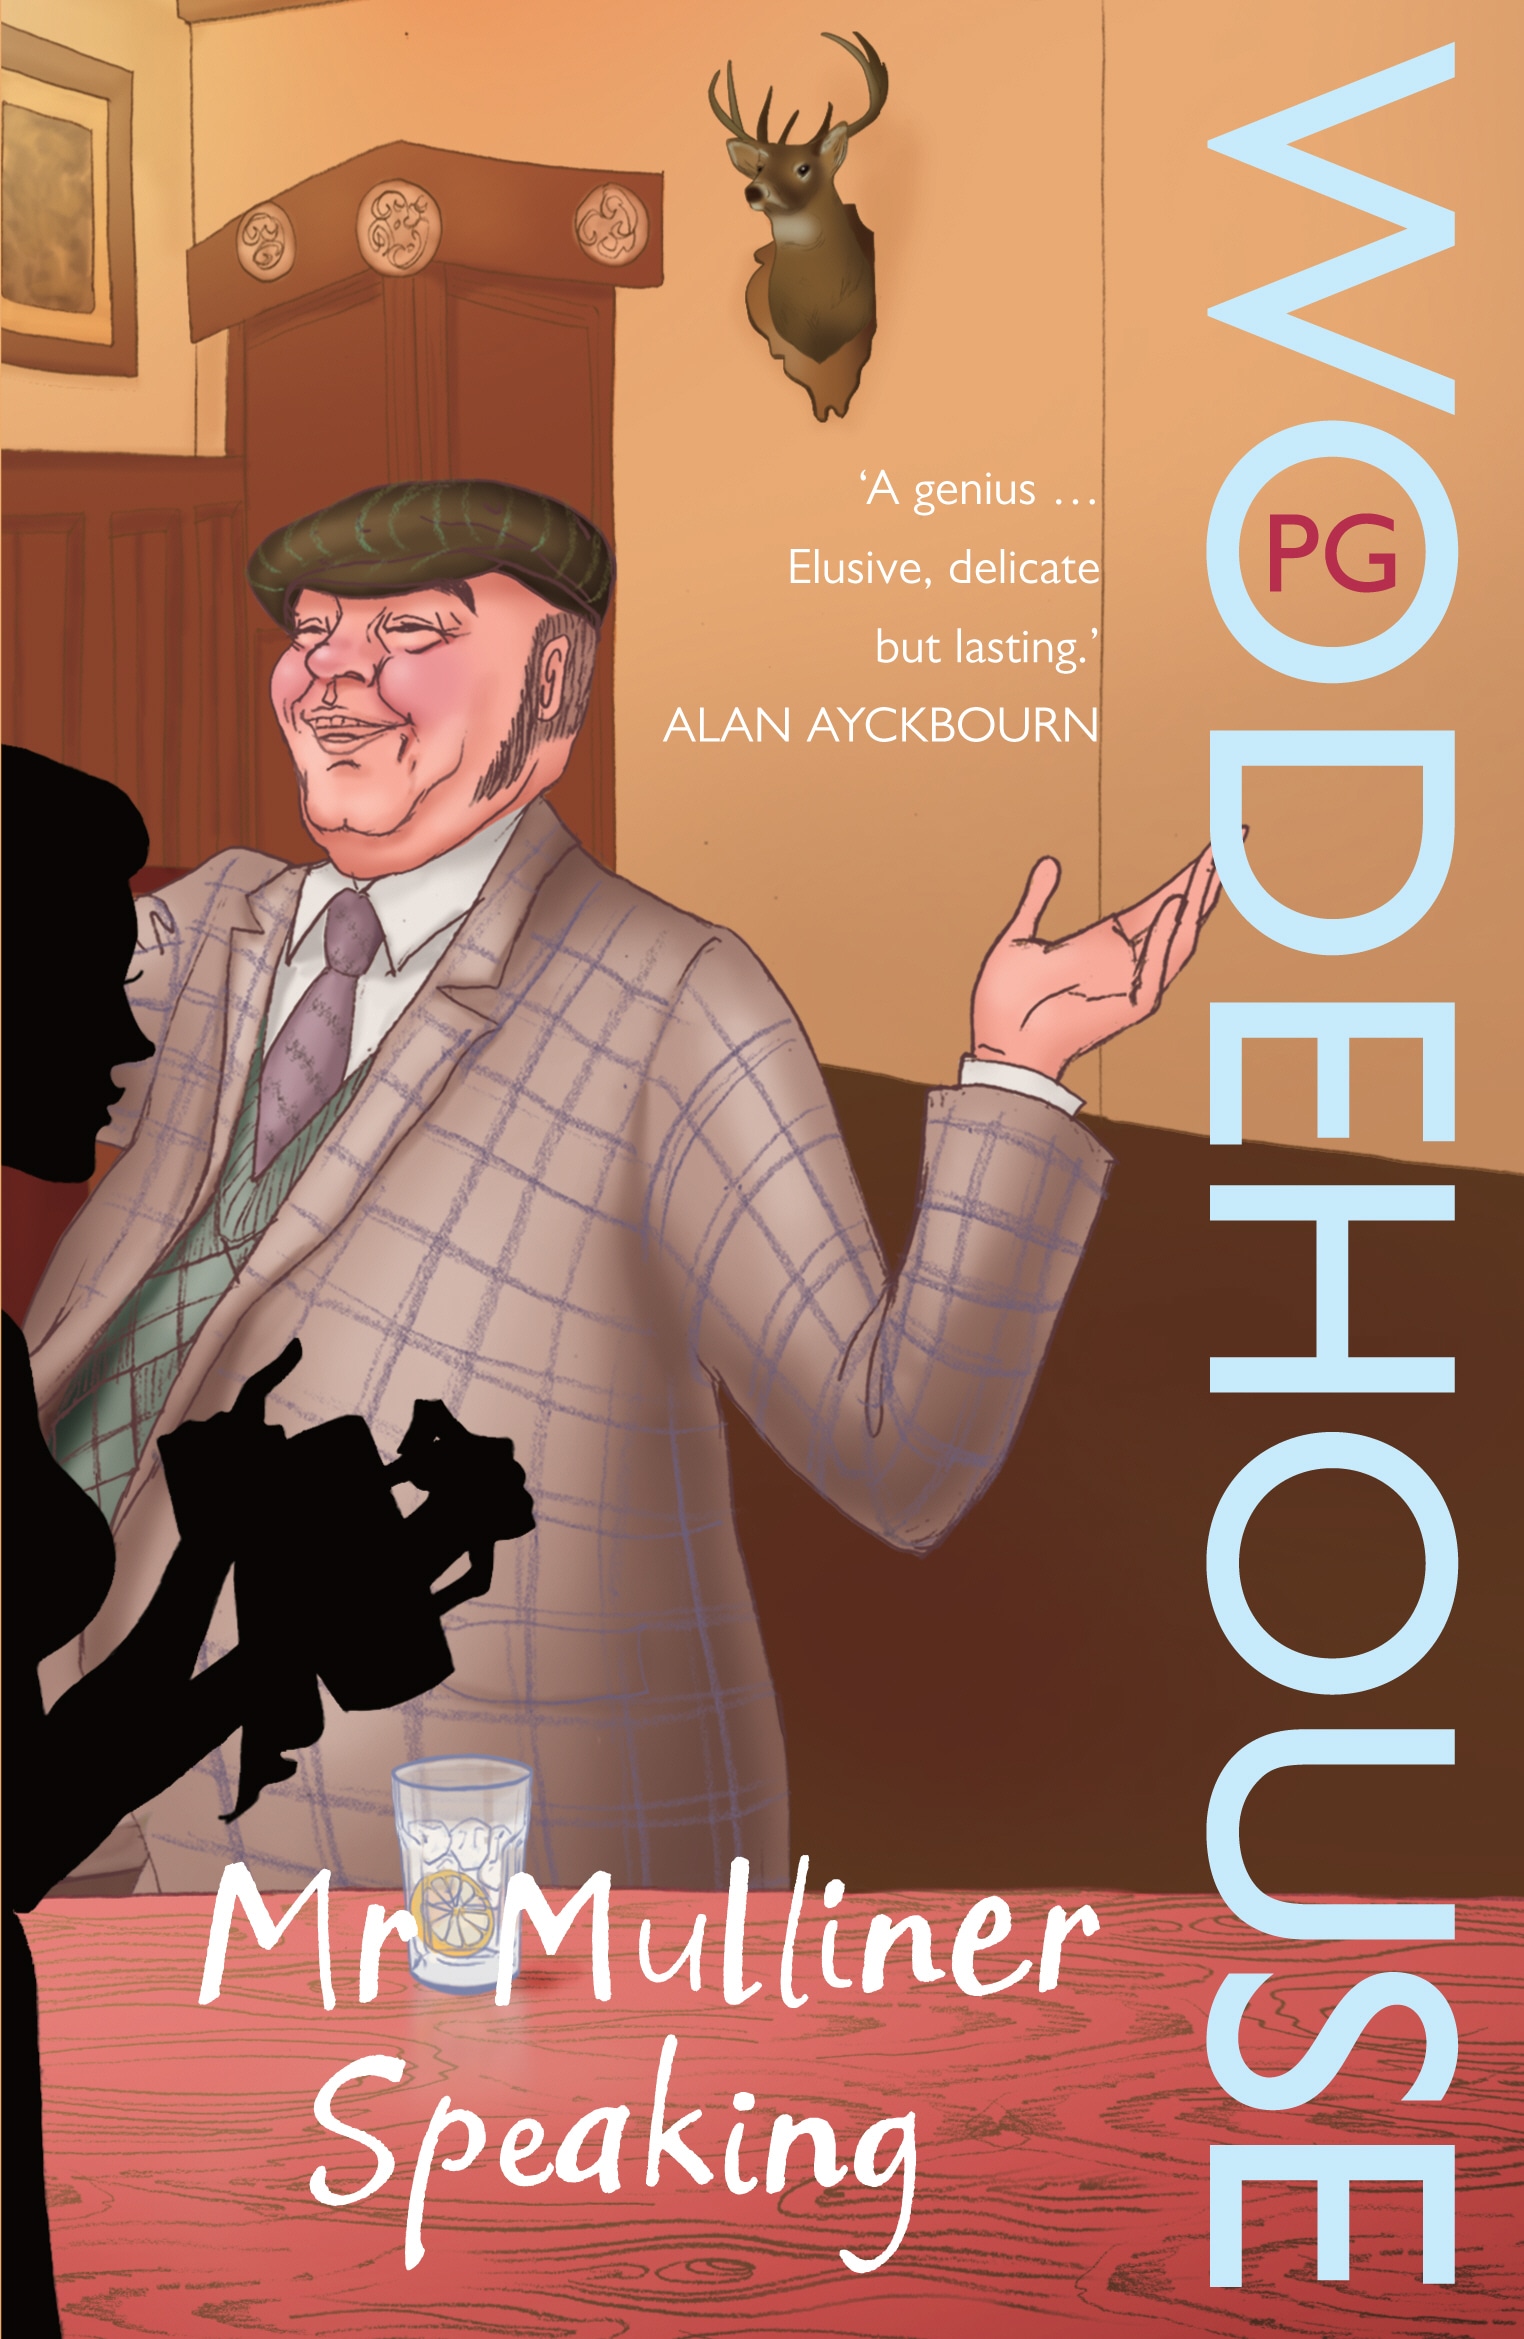 Book “Mr Mulliner Speaking” by P.G. Wodehouse — August 7, 2008